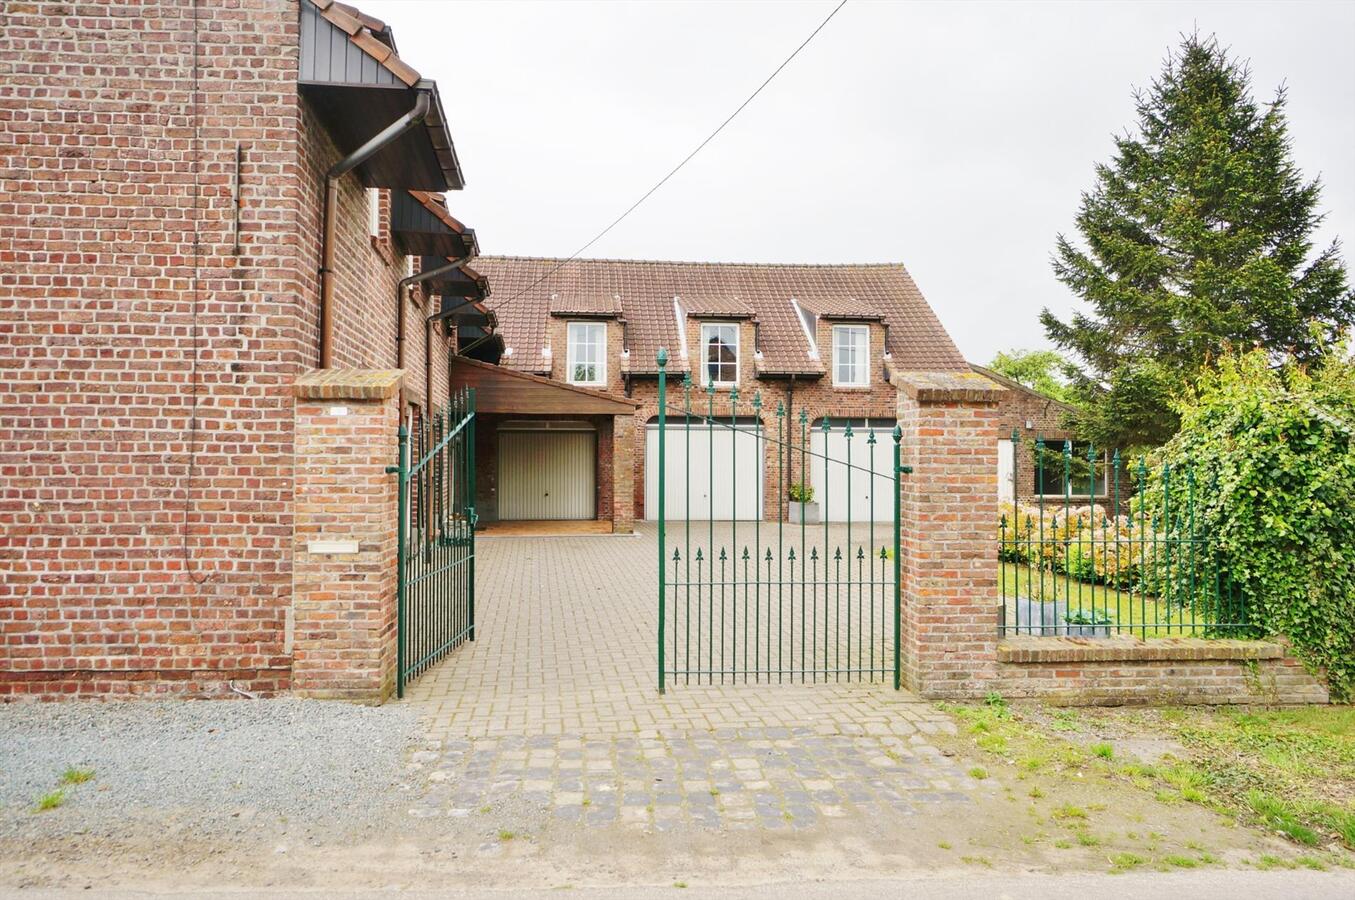 Property sold in Steenhuffel